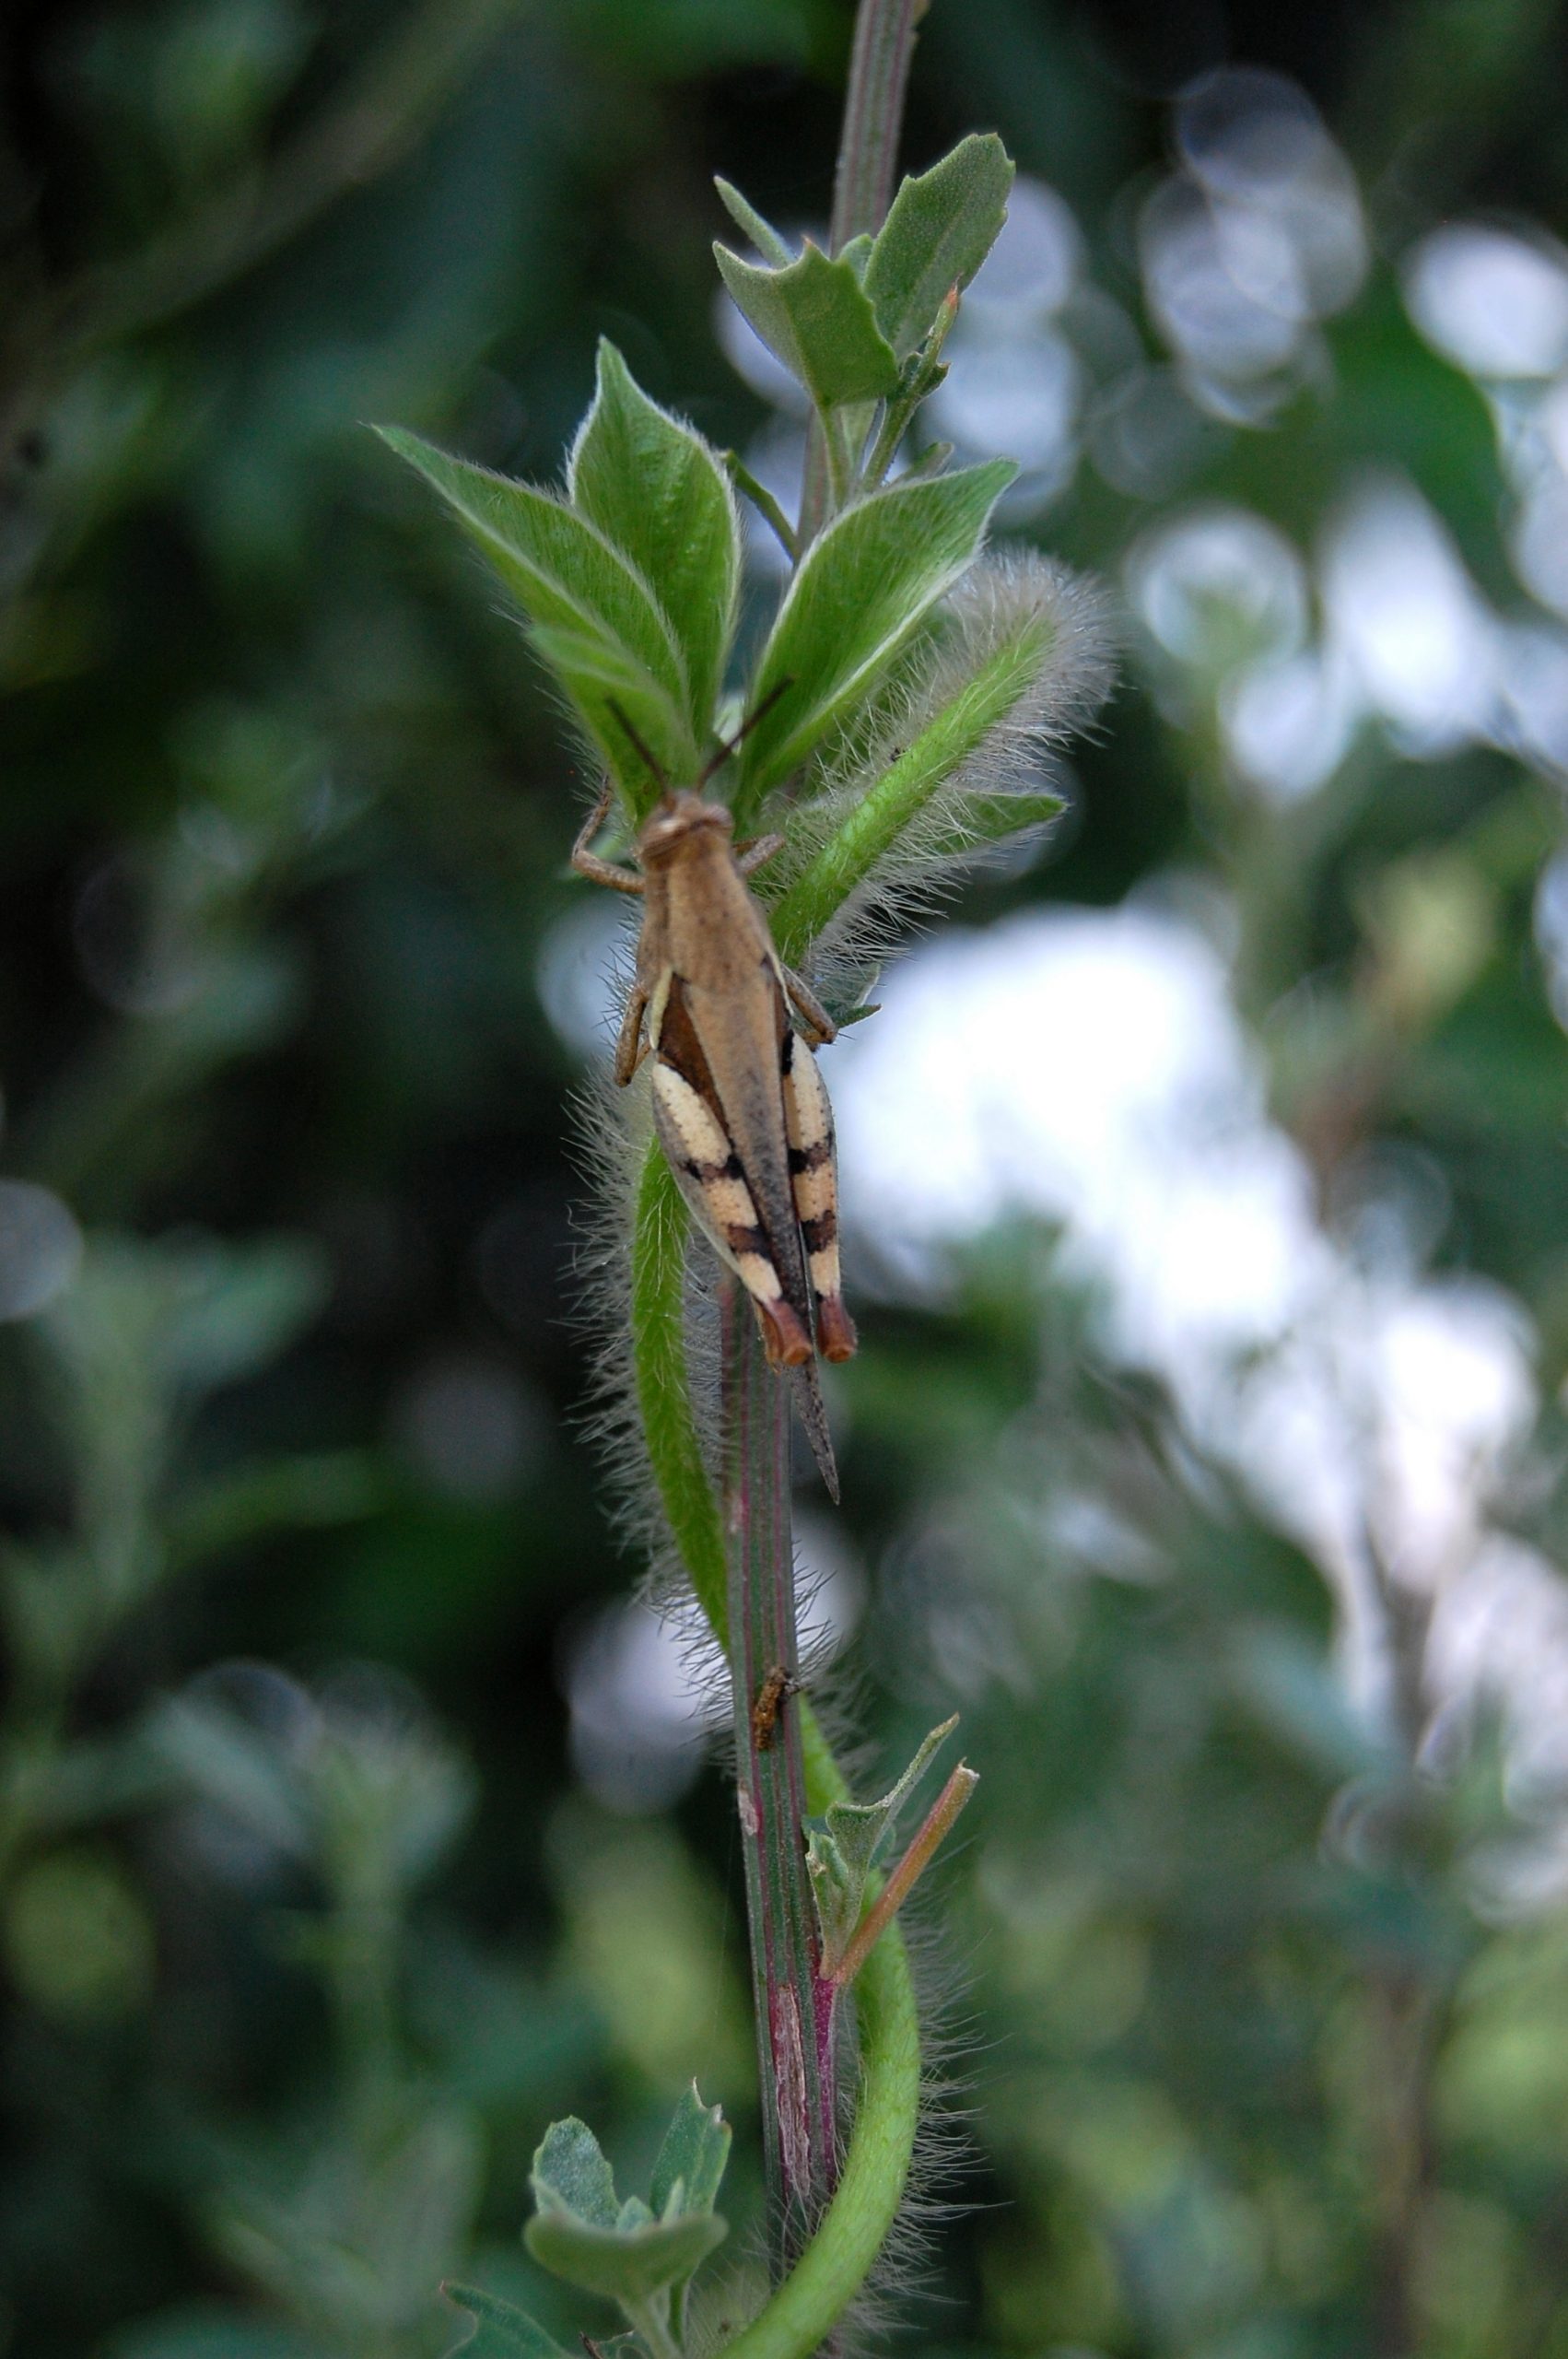 A grasshopper on a plant